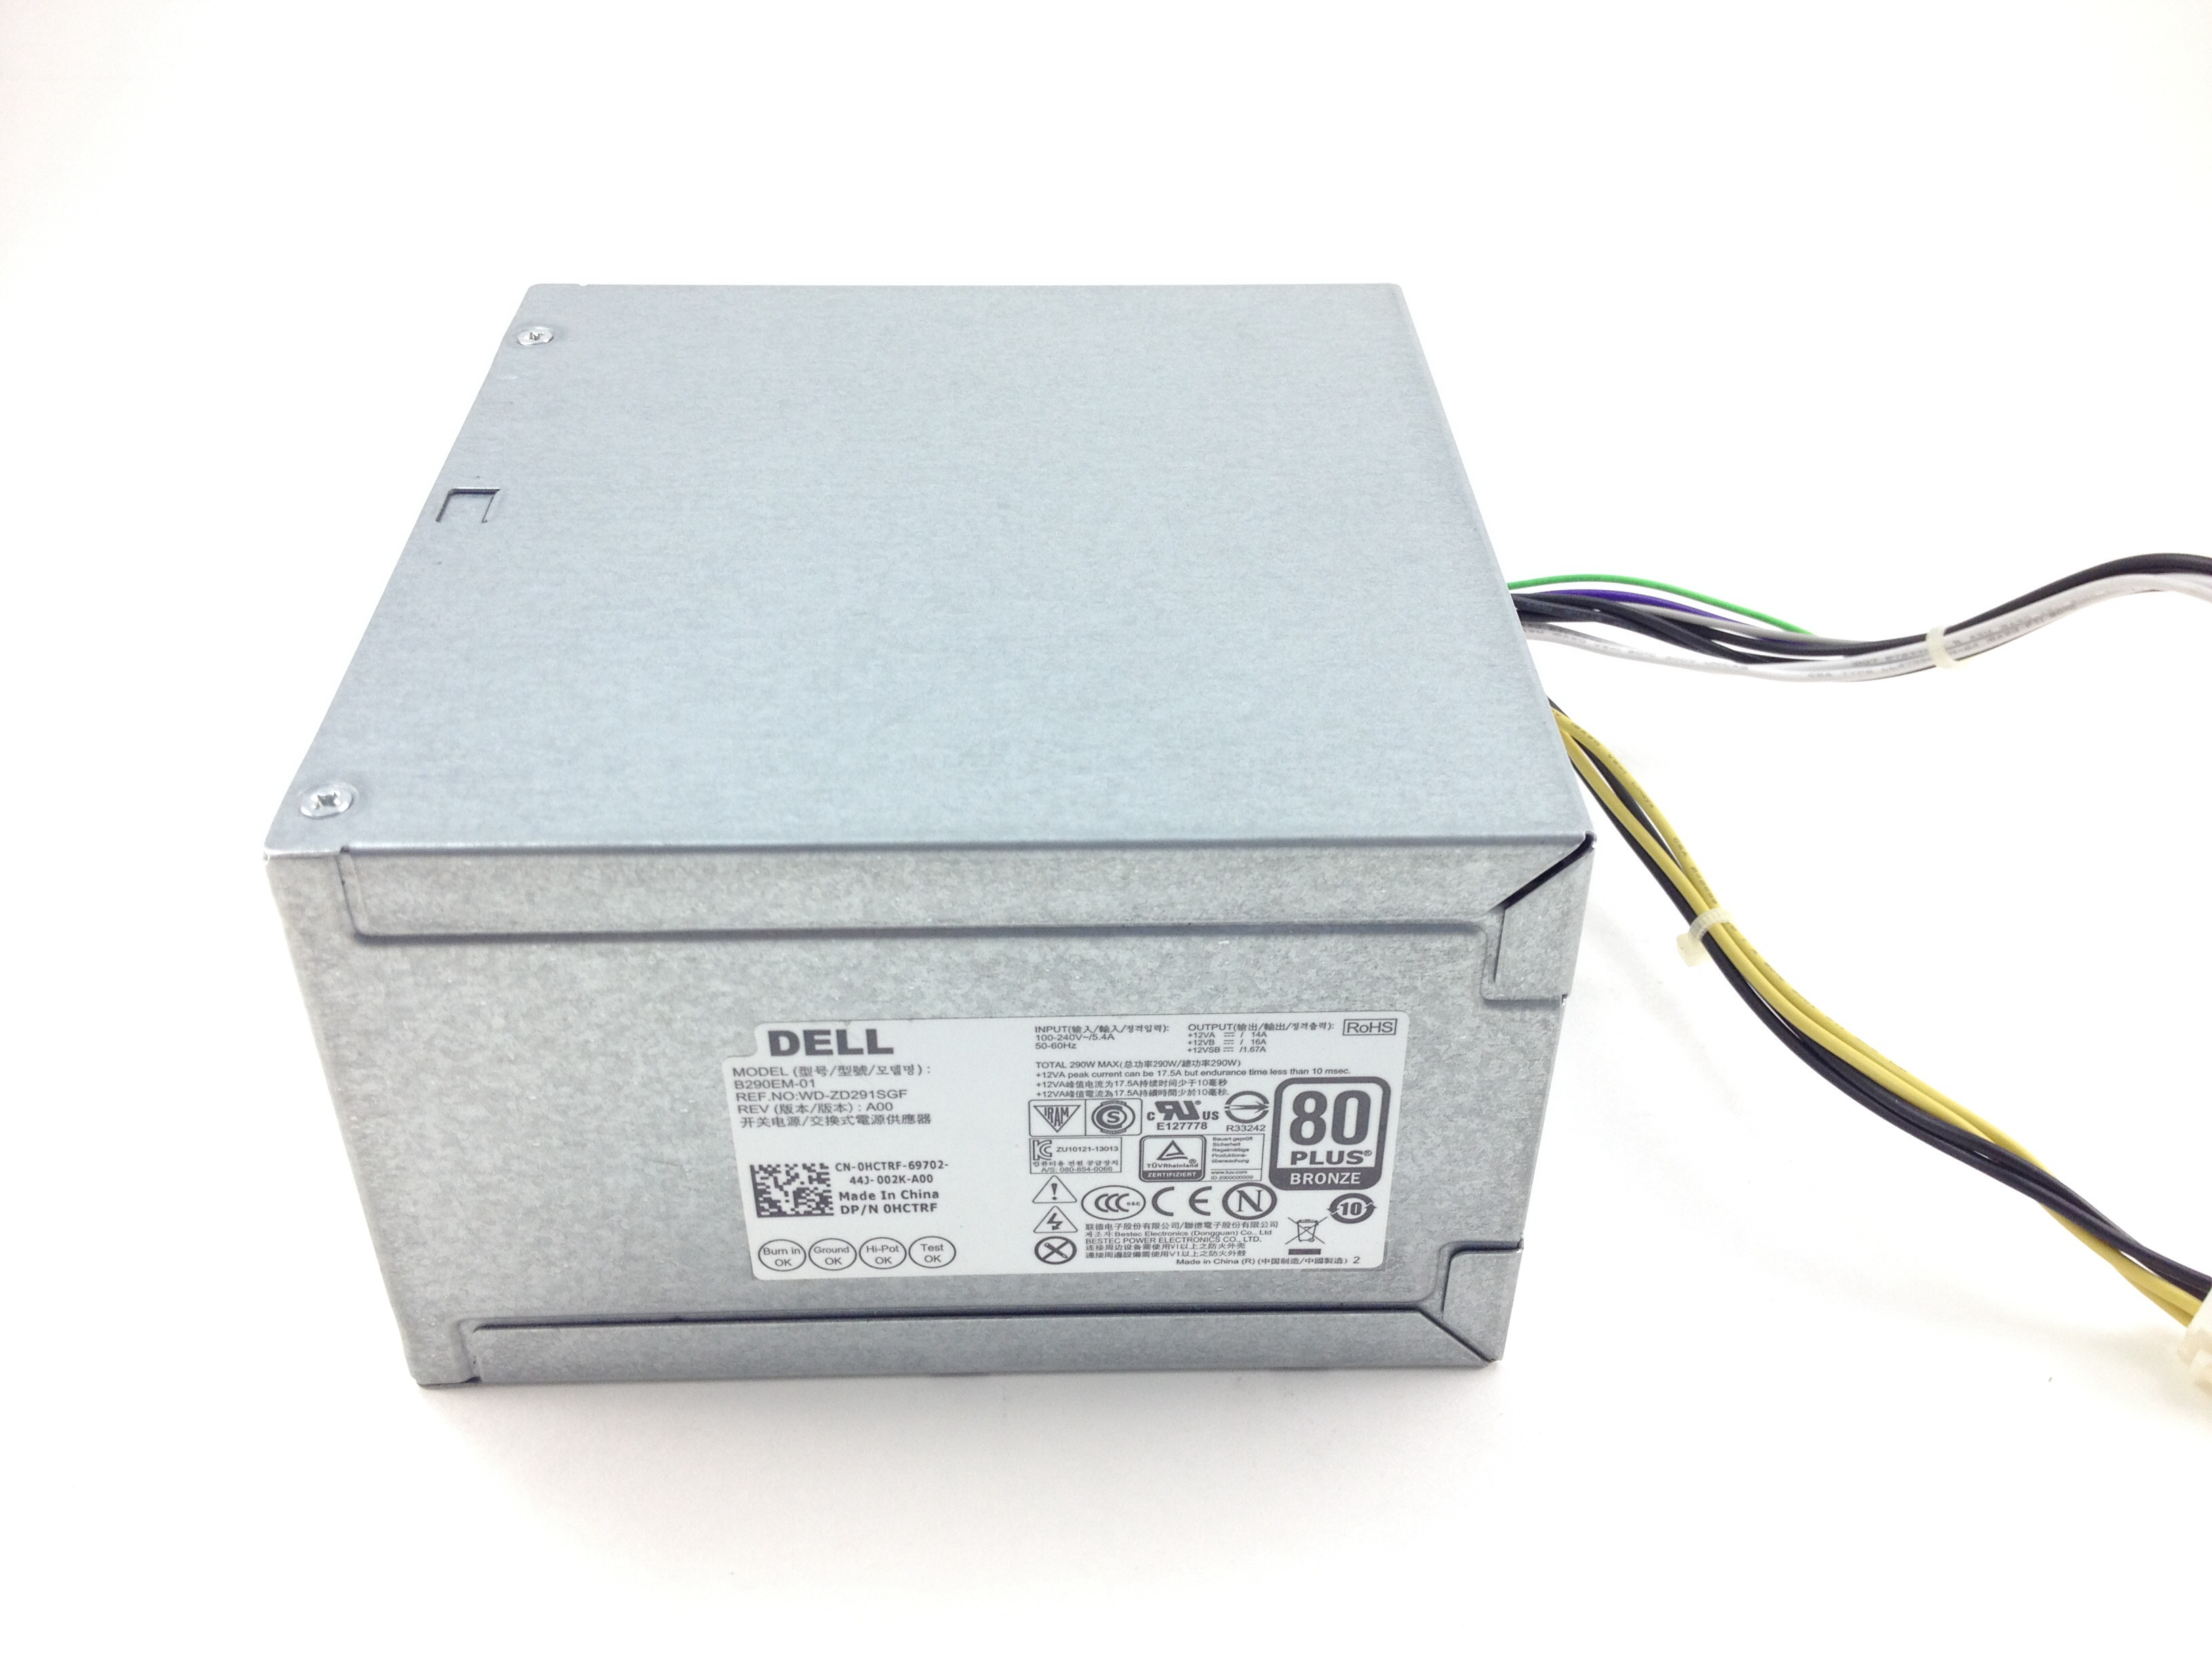 Dell Optiplex 7020 9020 T1700 290W Power Supply (B290EM-01)